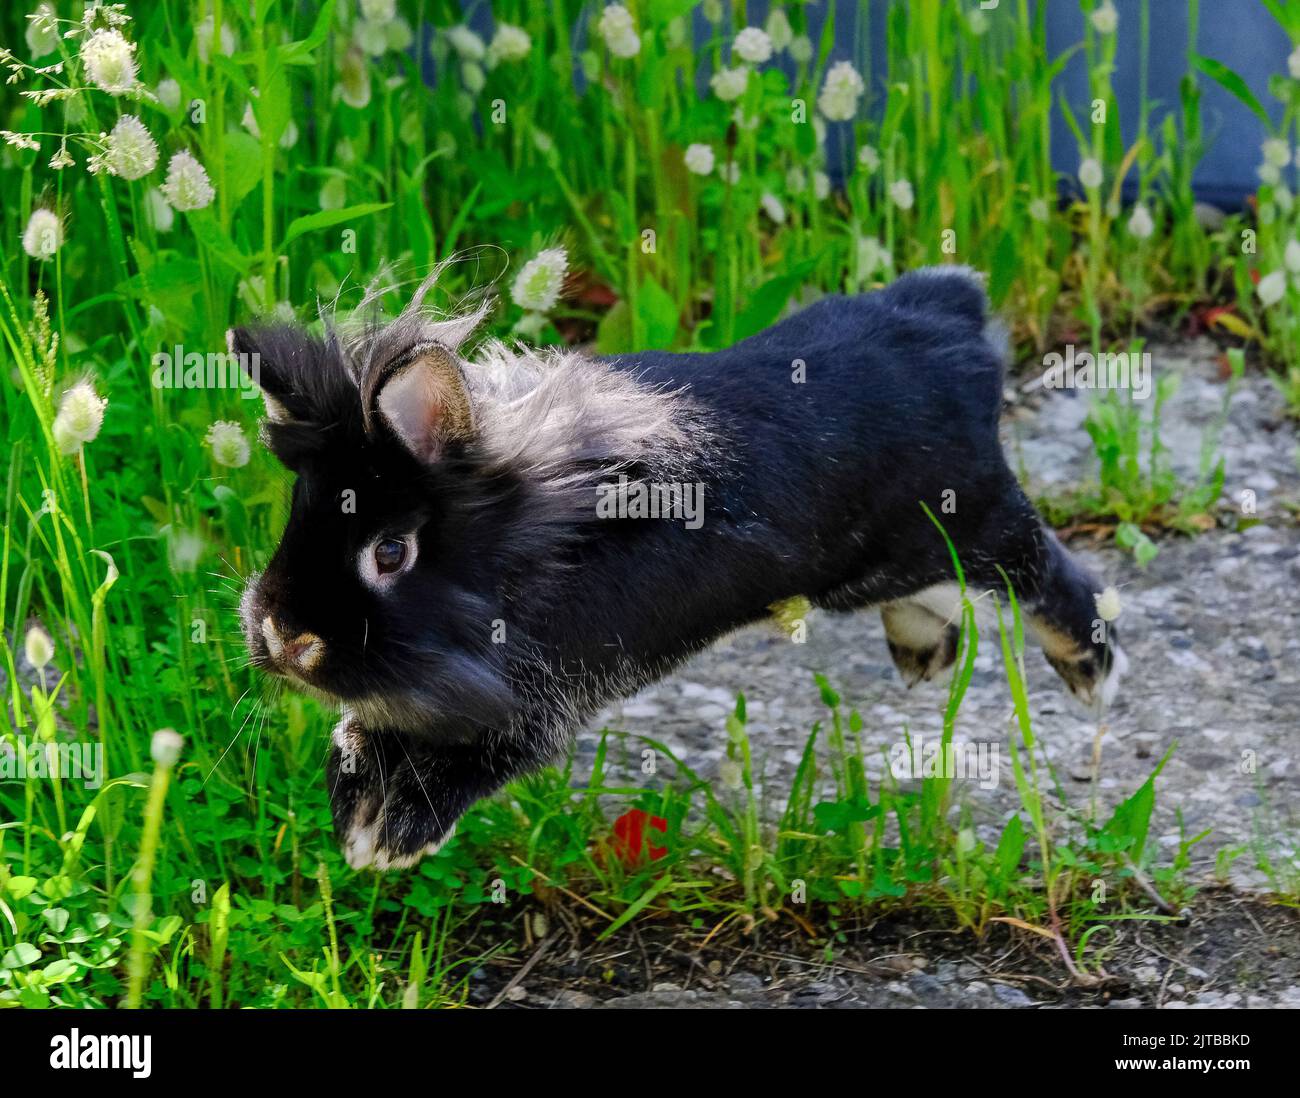 Lionhead rabbit jumping outdoors Stock Photo